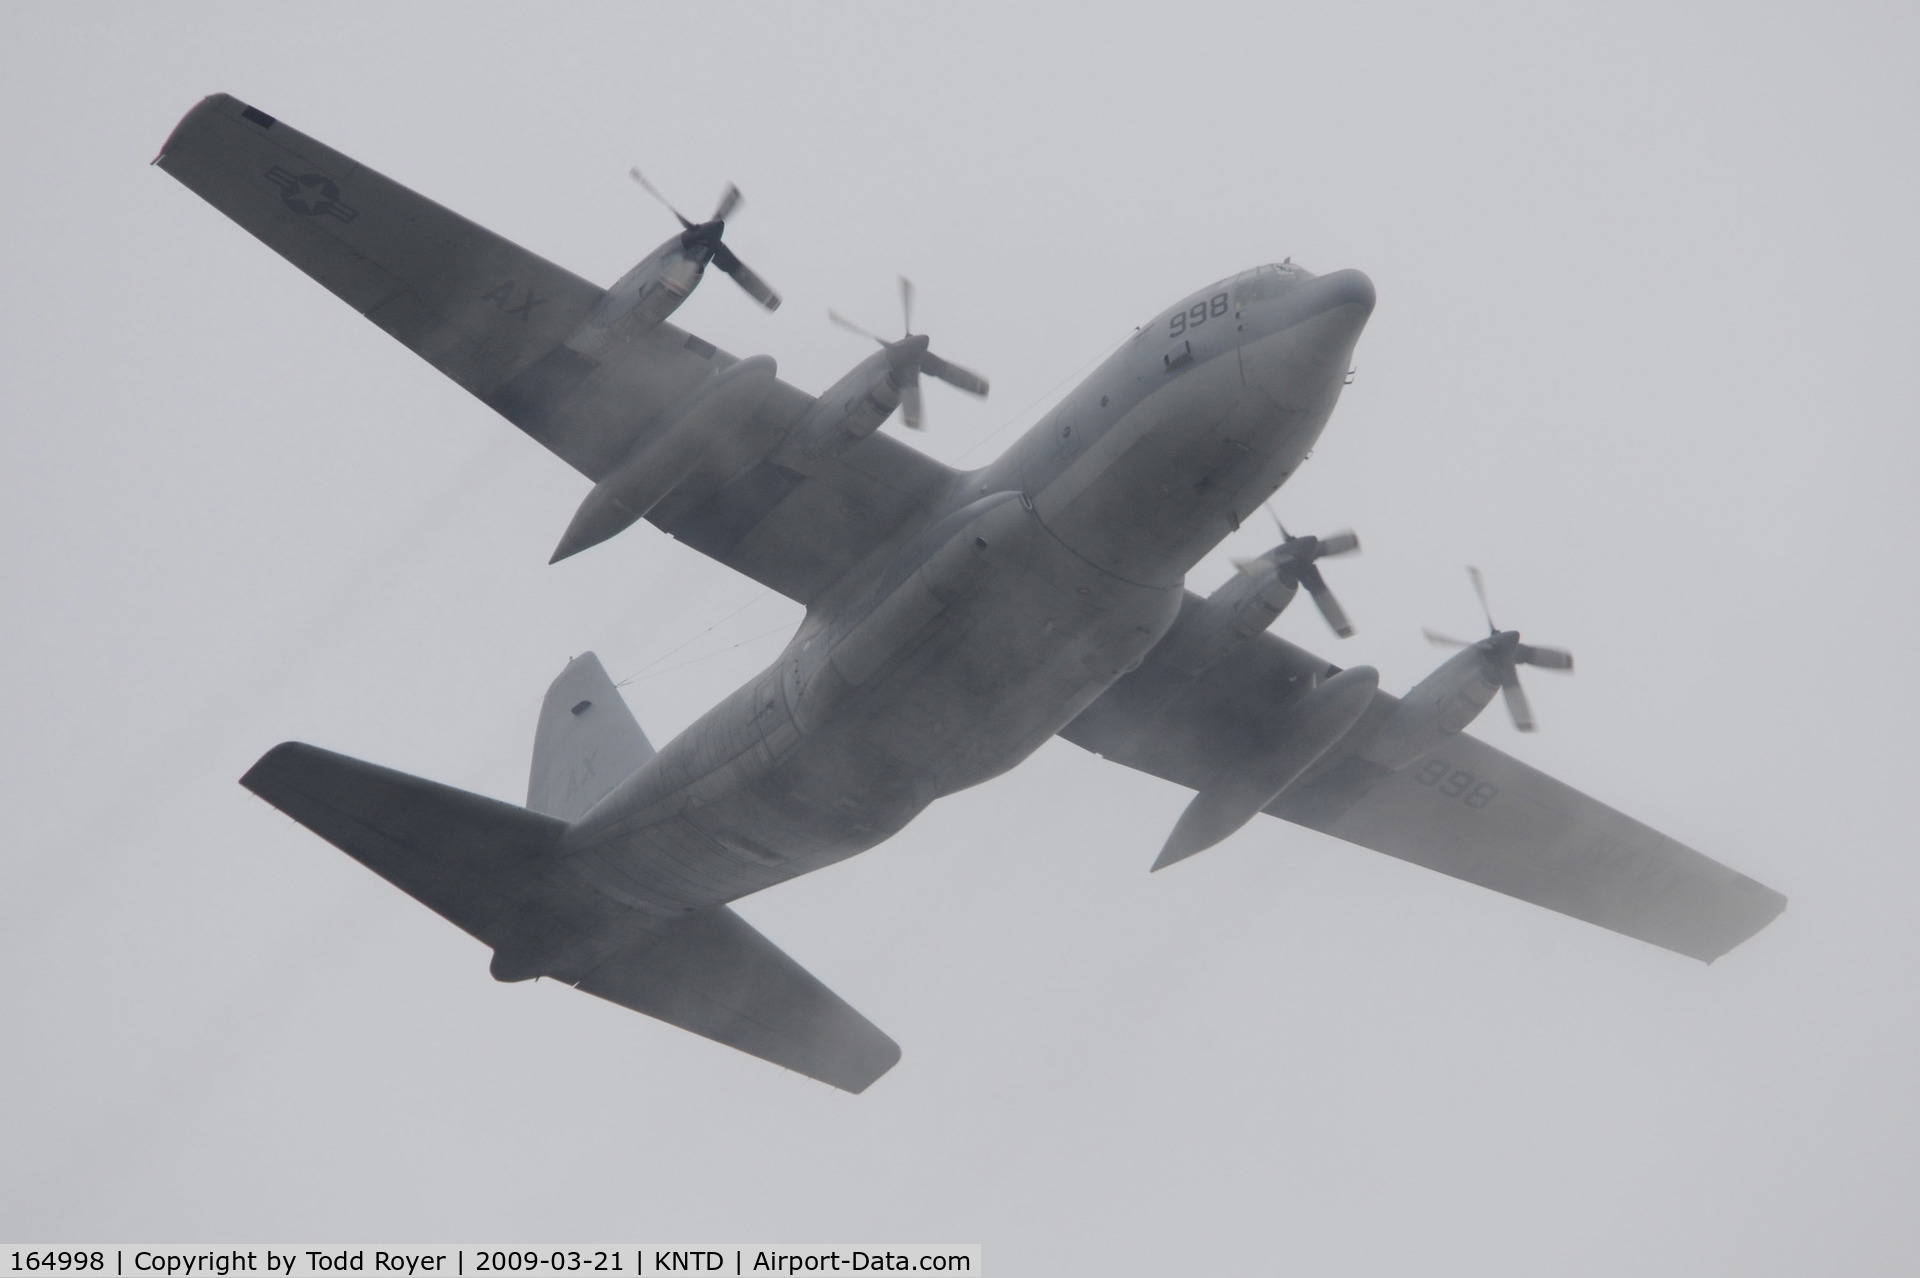 164998, 1991 Lockheed C-130T Hercules C/N 382-5305, From the backyard